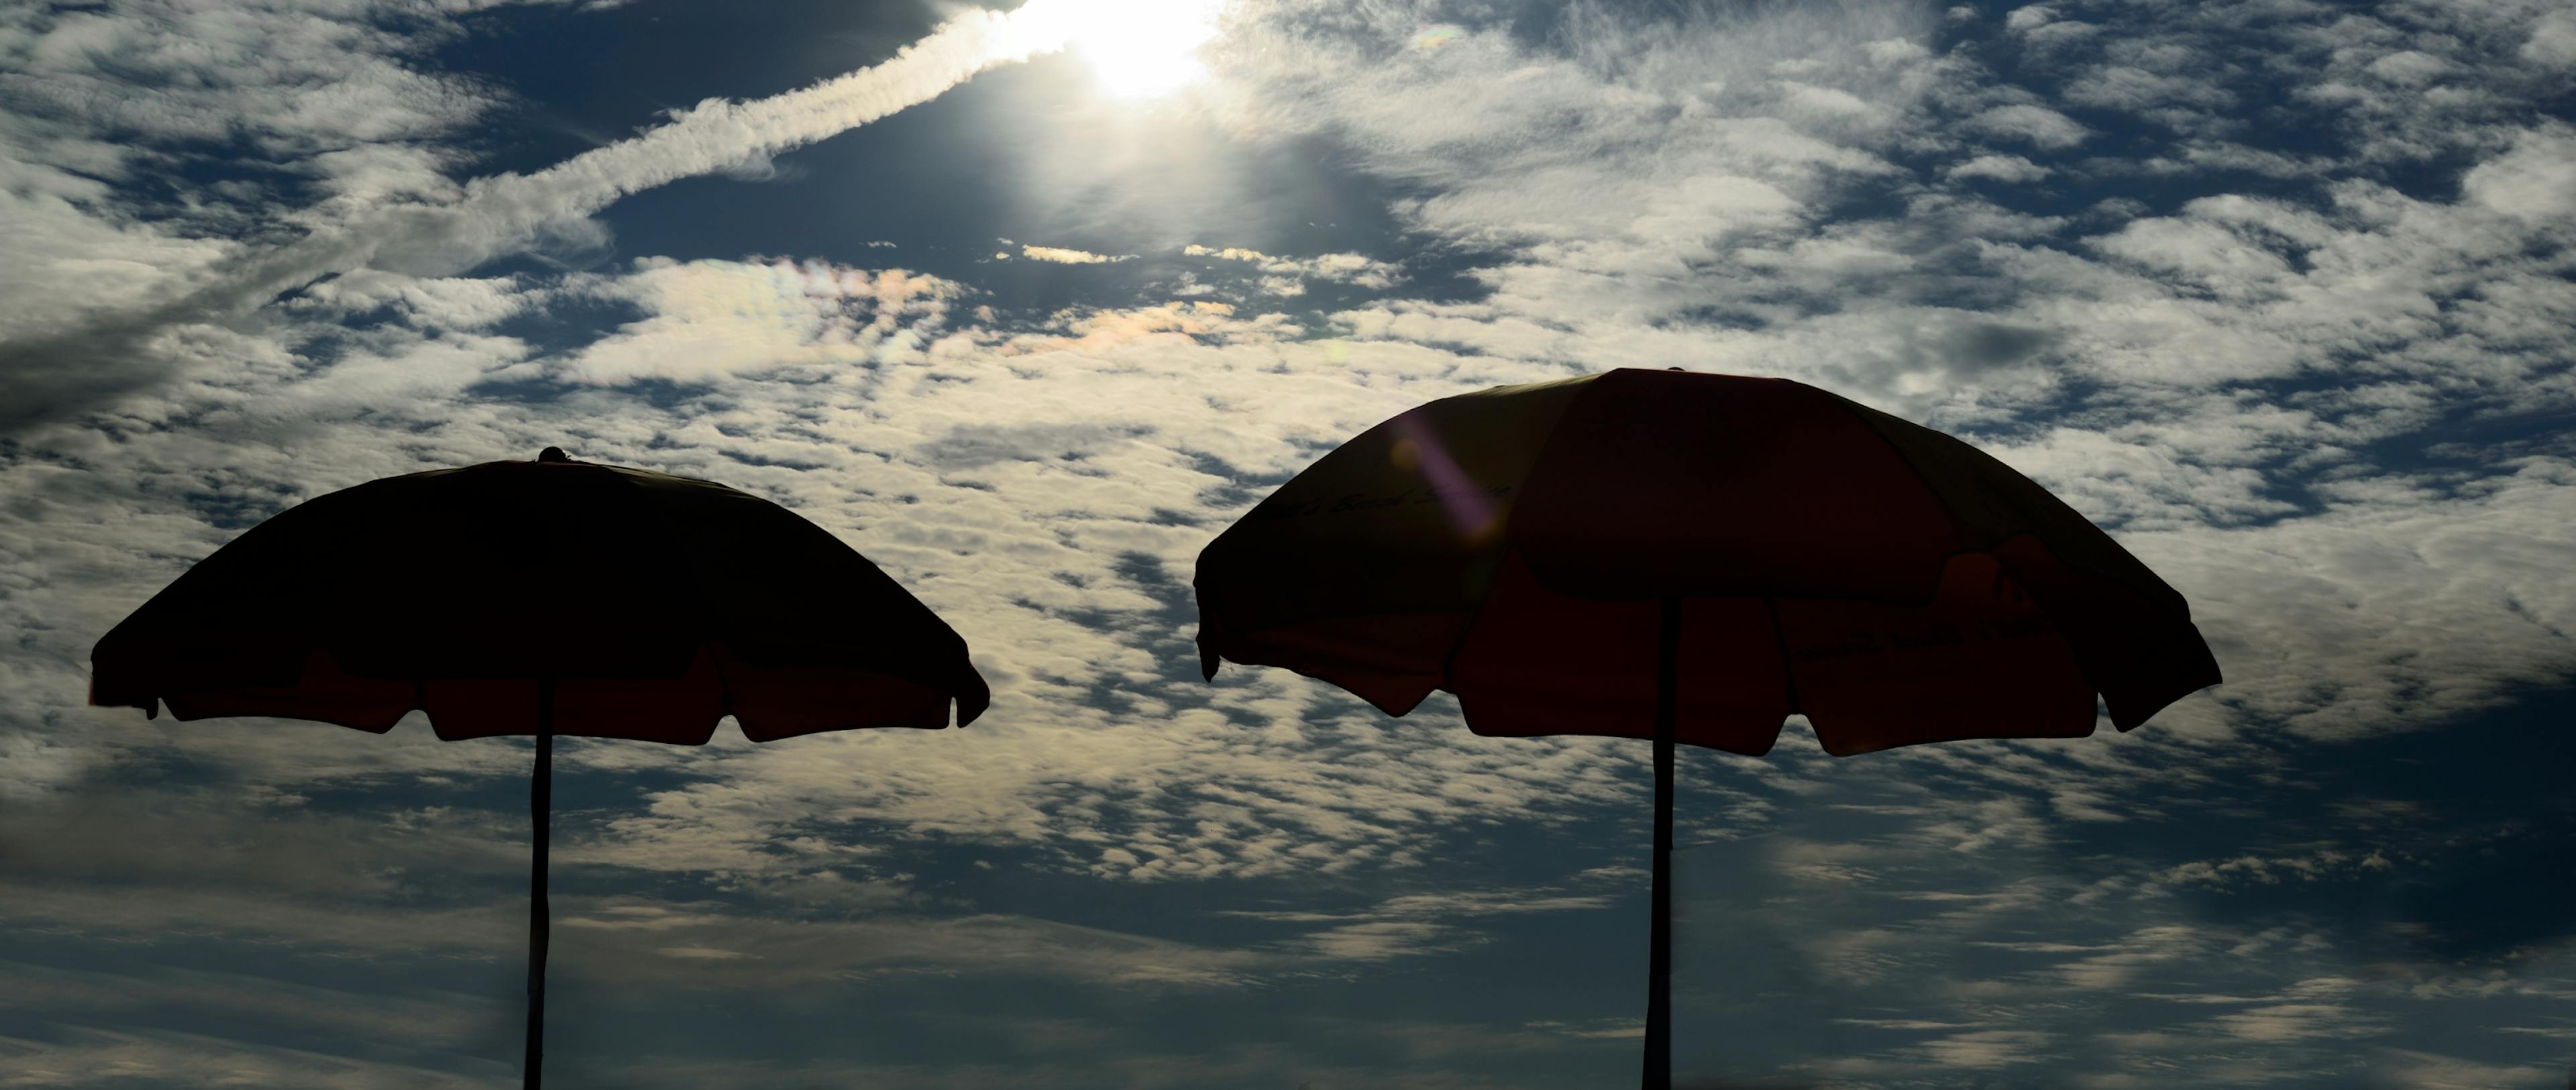 Two umbrellas are positioned under a brilliant sky.